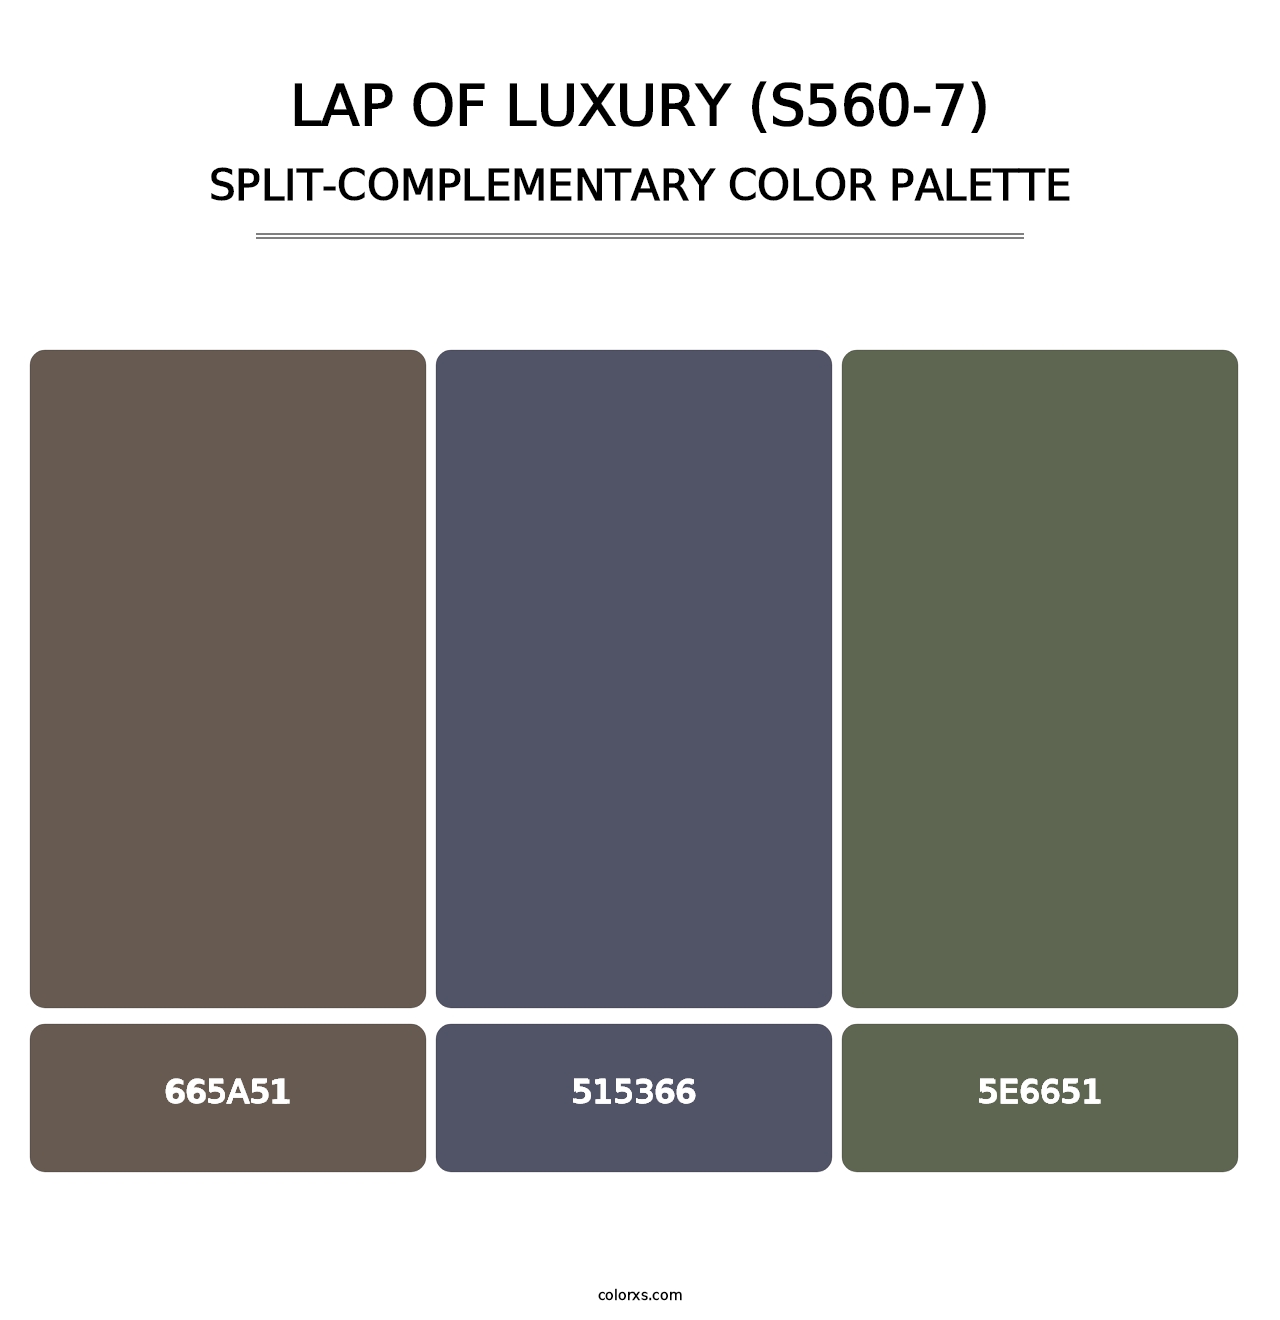 Lap Of Luxury (S560-7) - Split-Complementary Color Palette